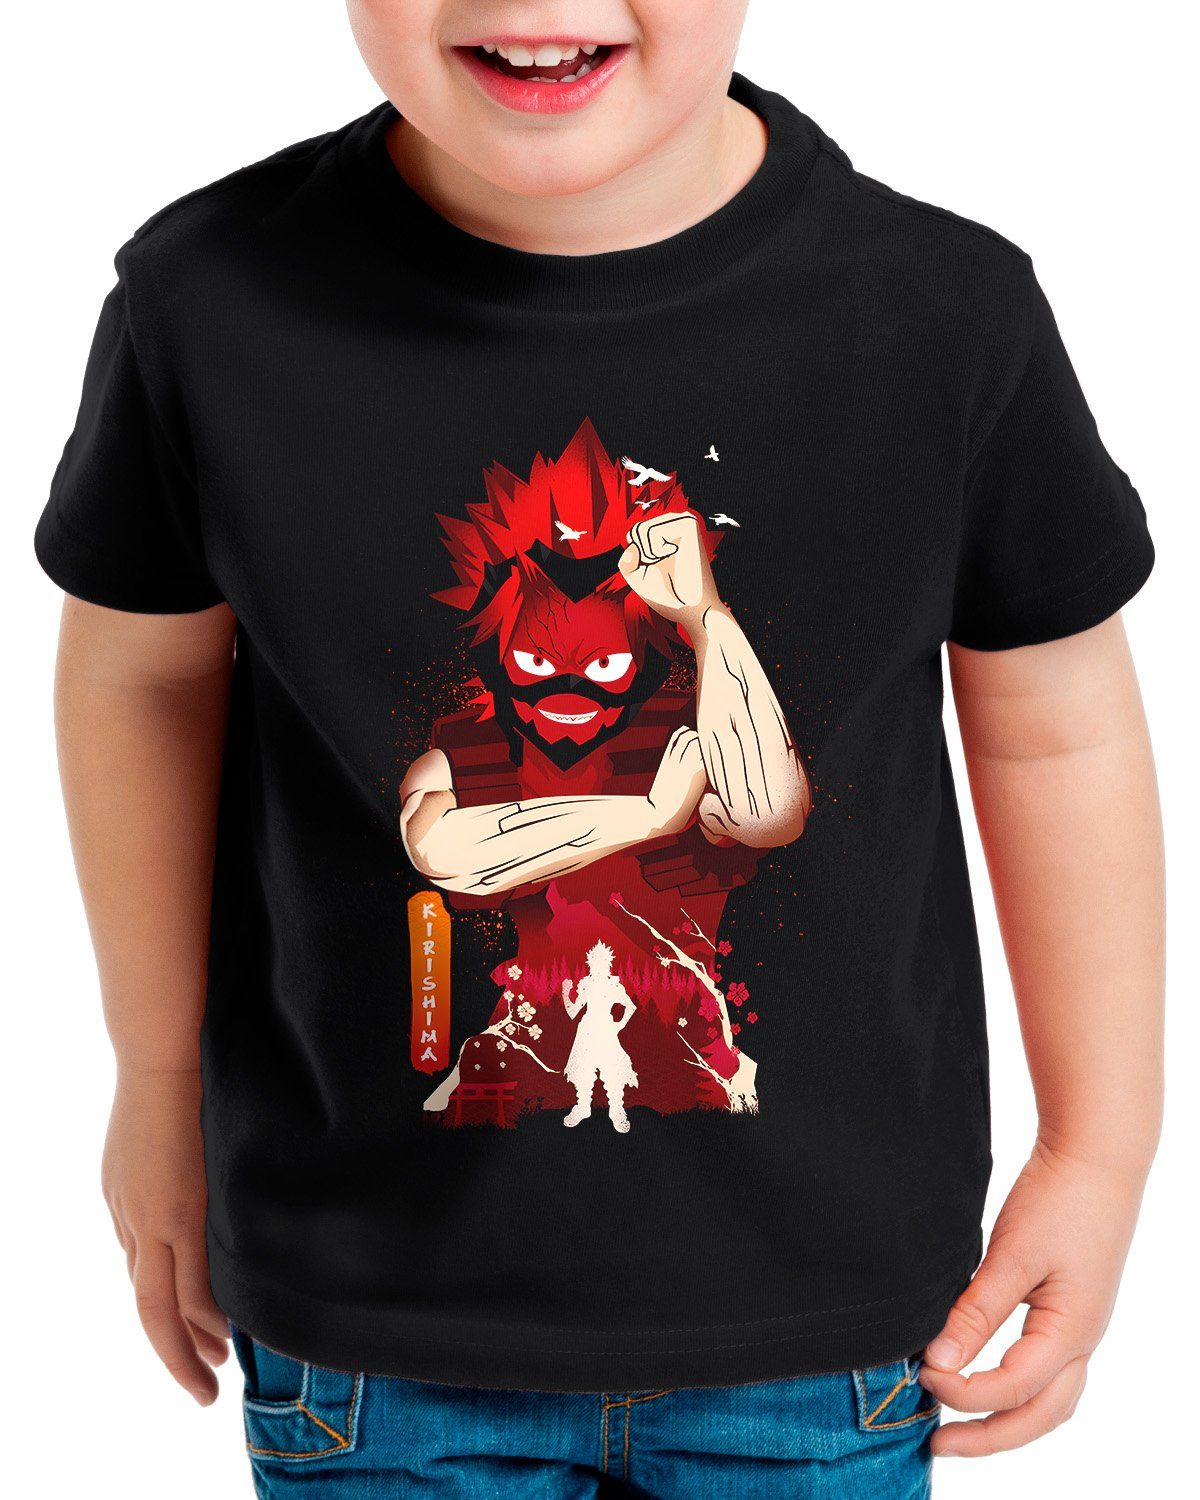 academia my manga Riot hero Red style3 anime Kinder T-Shirt Print-Shirt cosplay